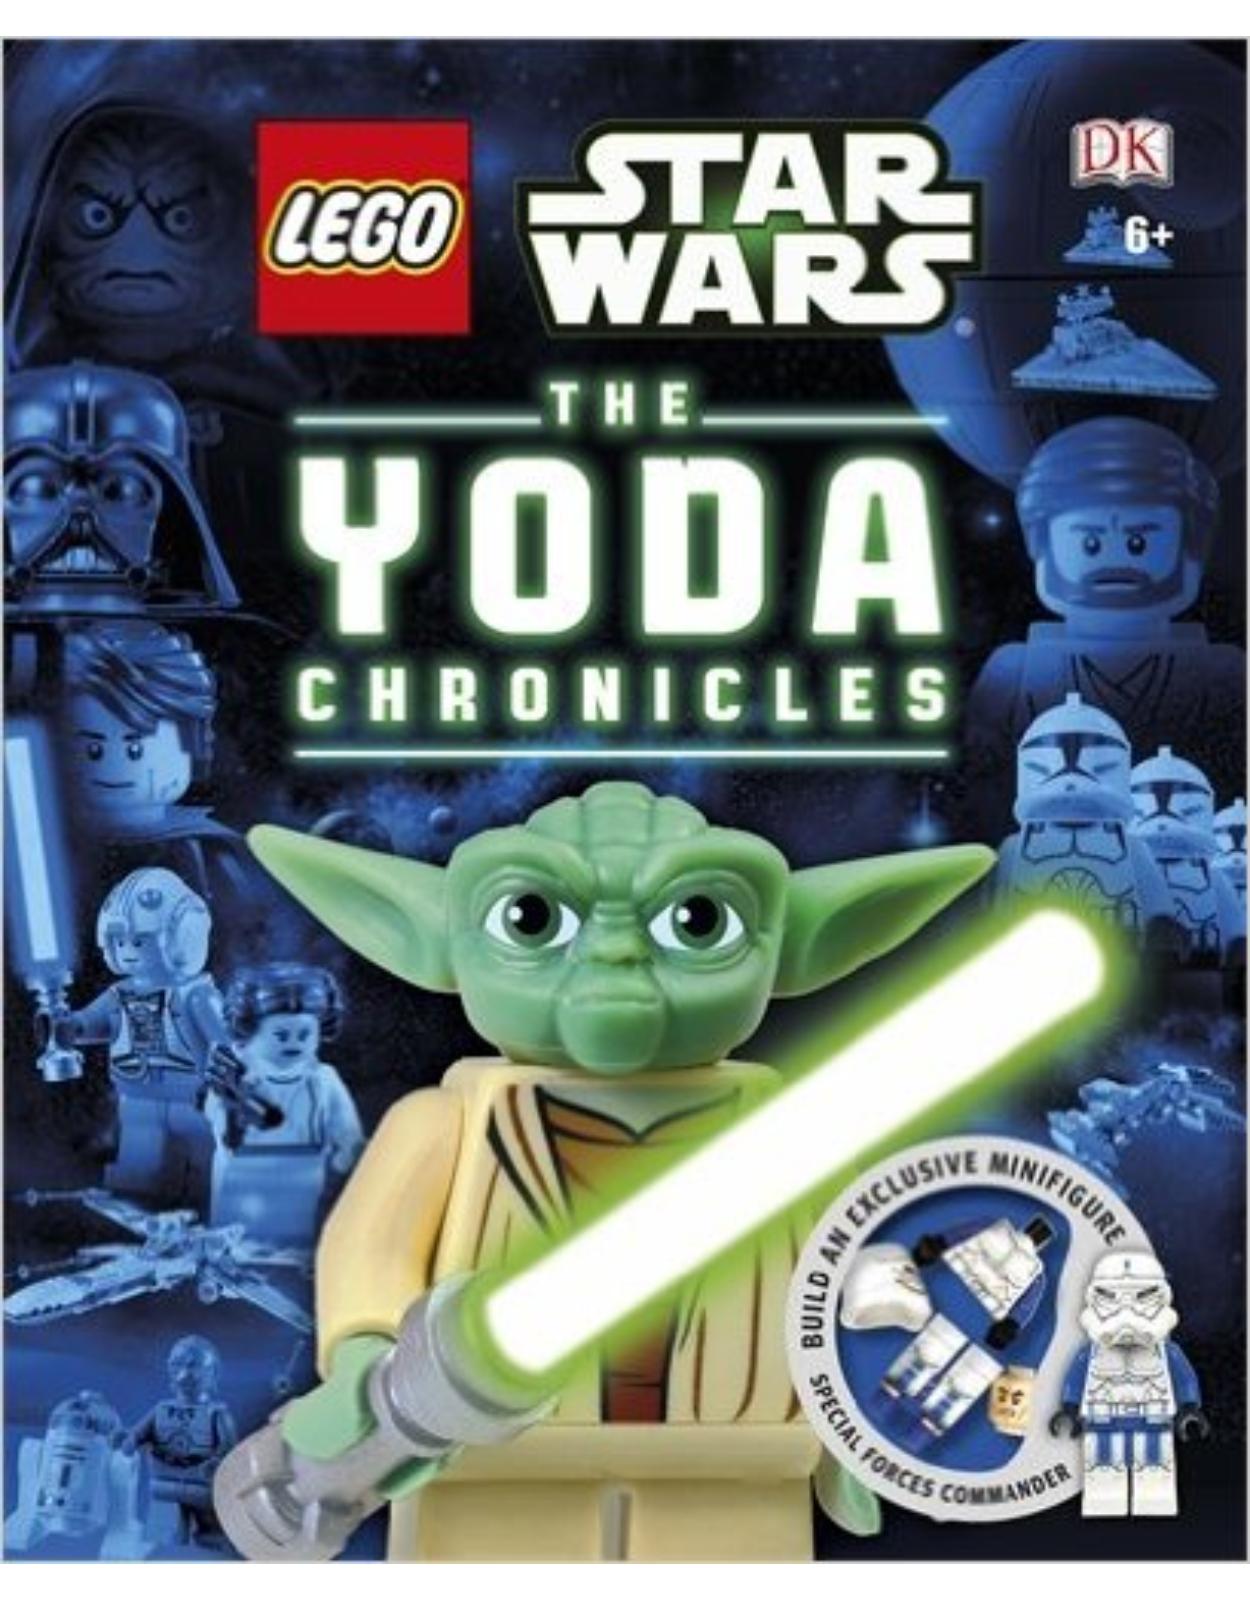 LEGO Star Wars the Yoda Chronicles